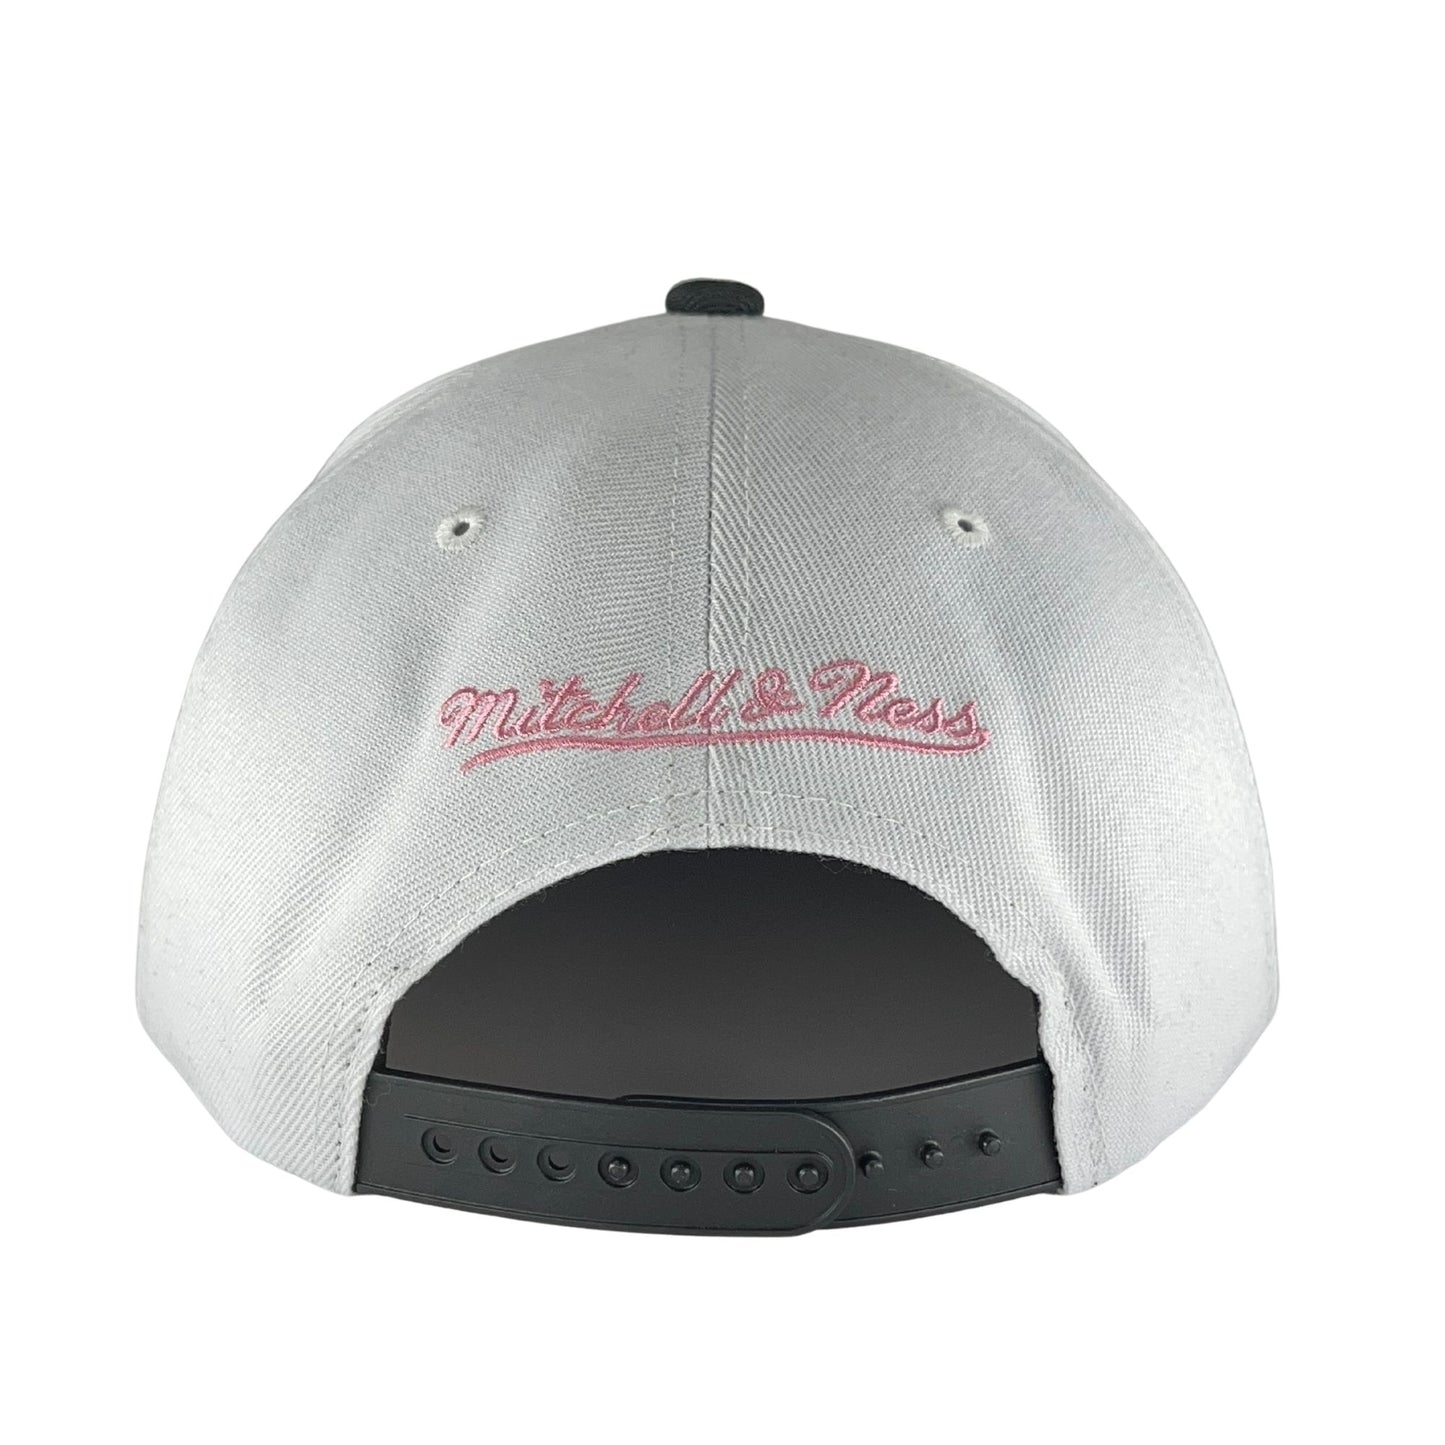 Chicago Bulls White/Pink/Black Snapback Hat